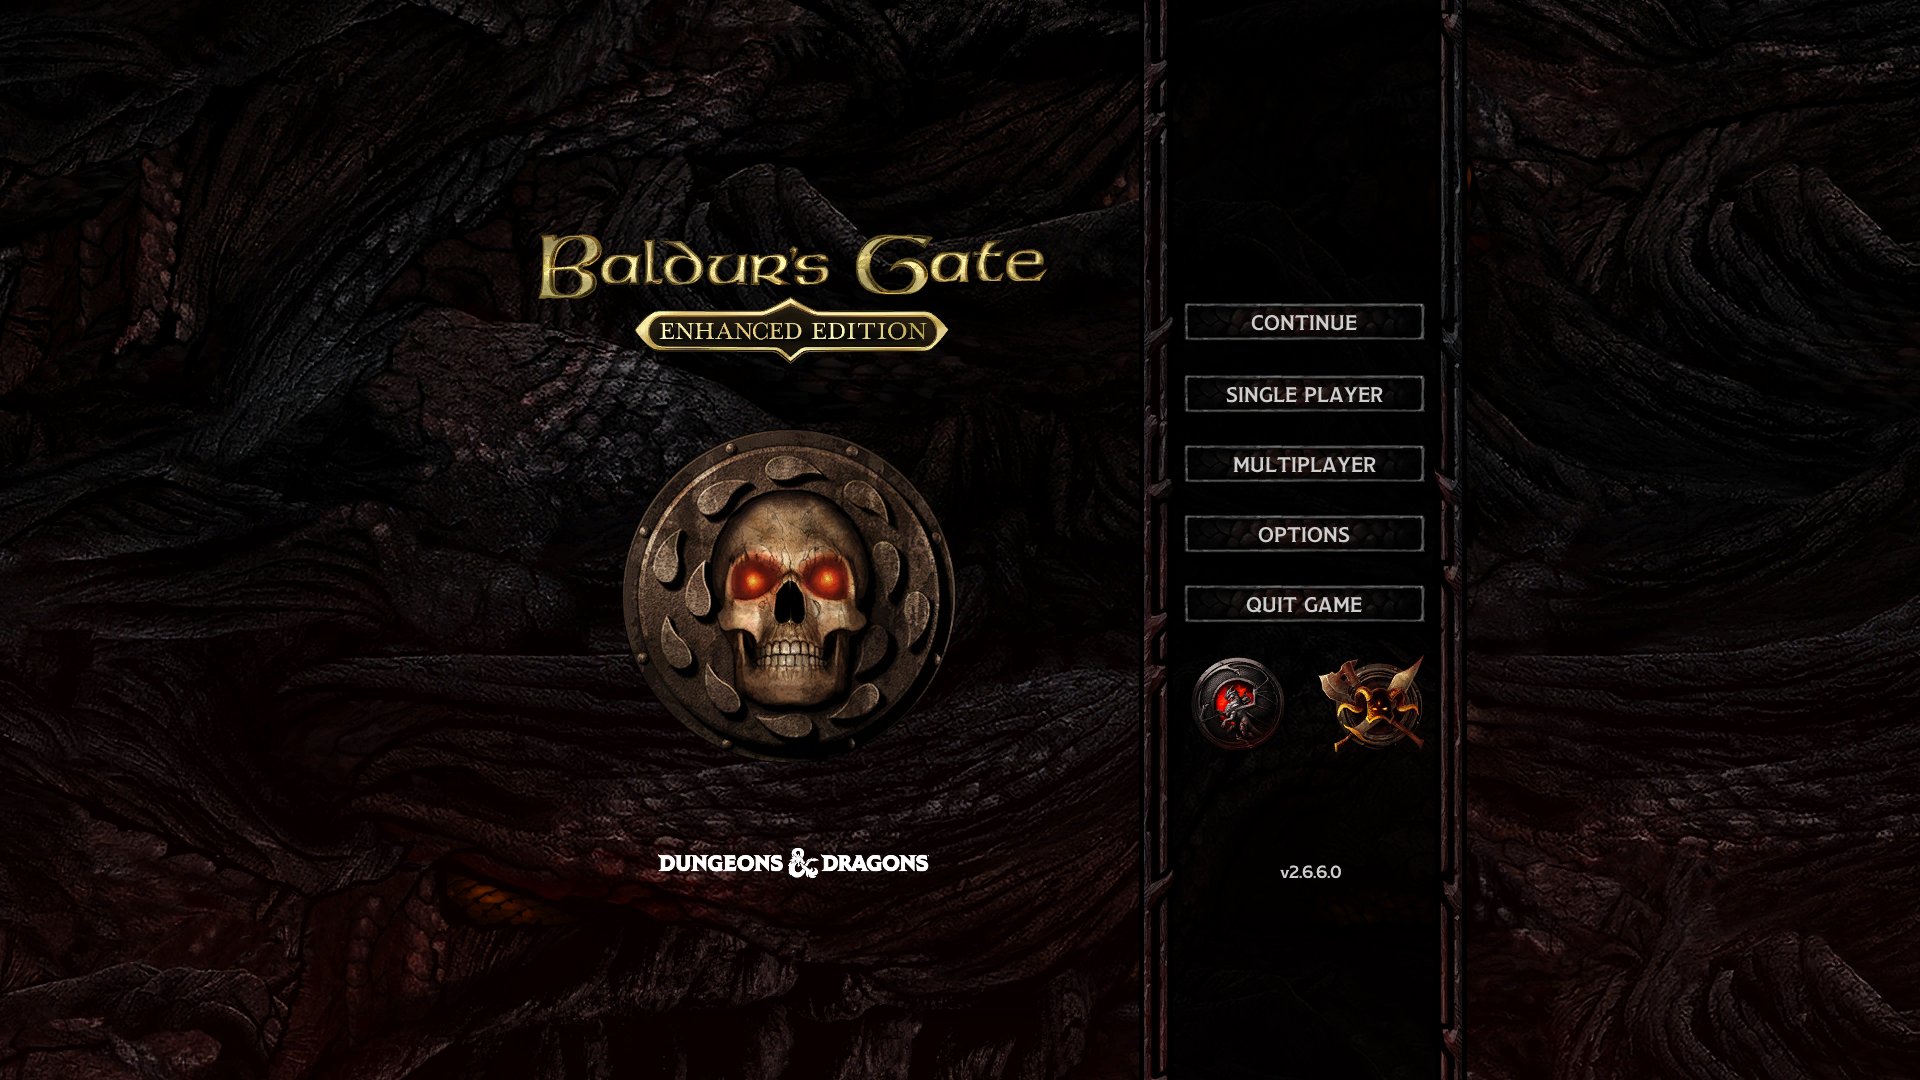 Baldurs Gate Title Screen